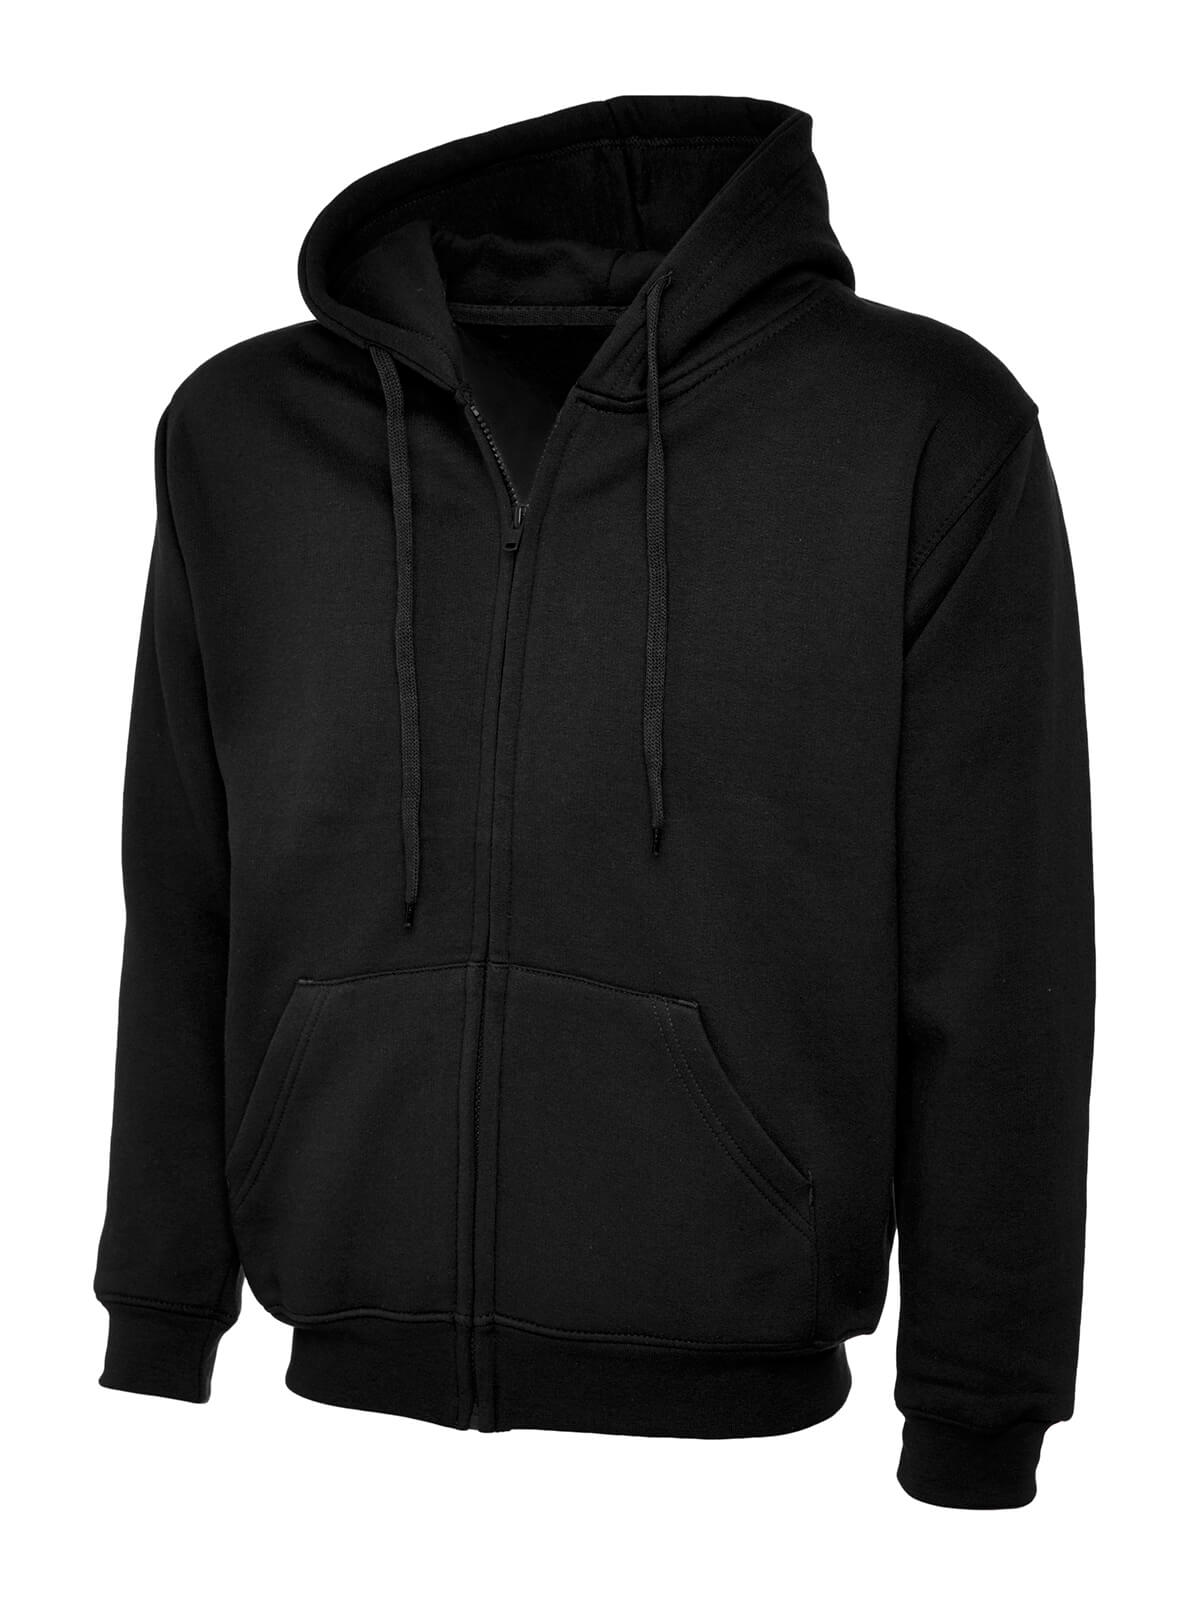 Plain Black Hooded Sweatshirt Zipper Jumper Double Fabric Soft Ribbed